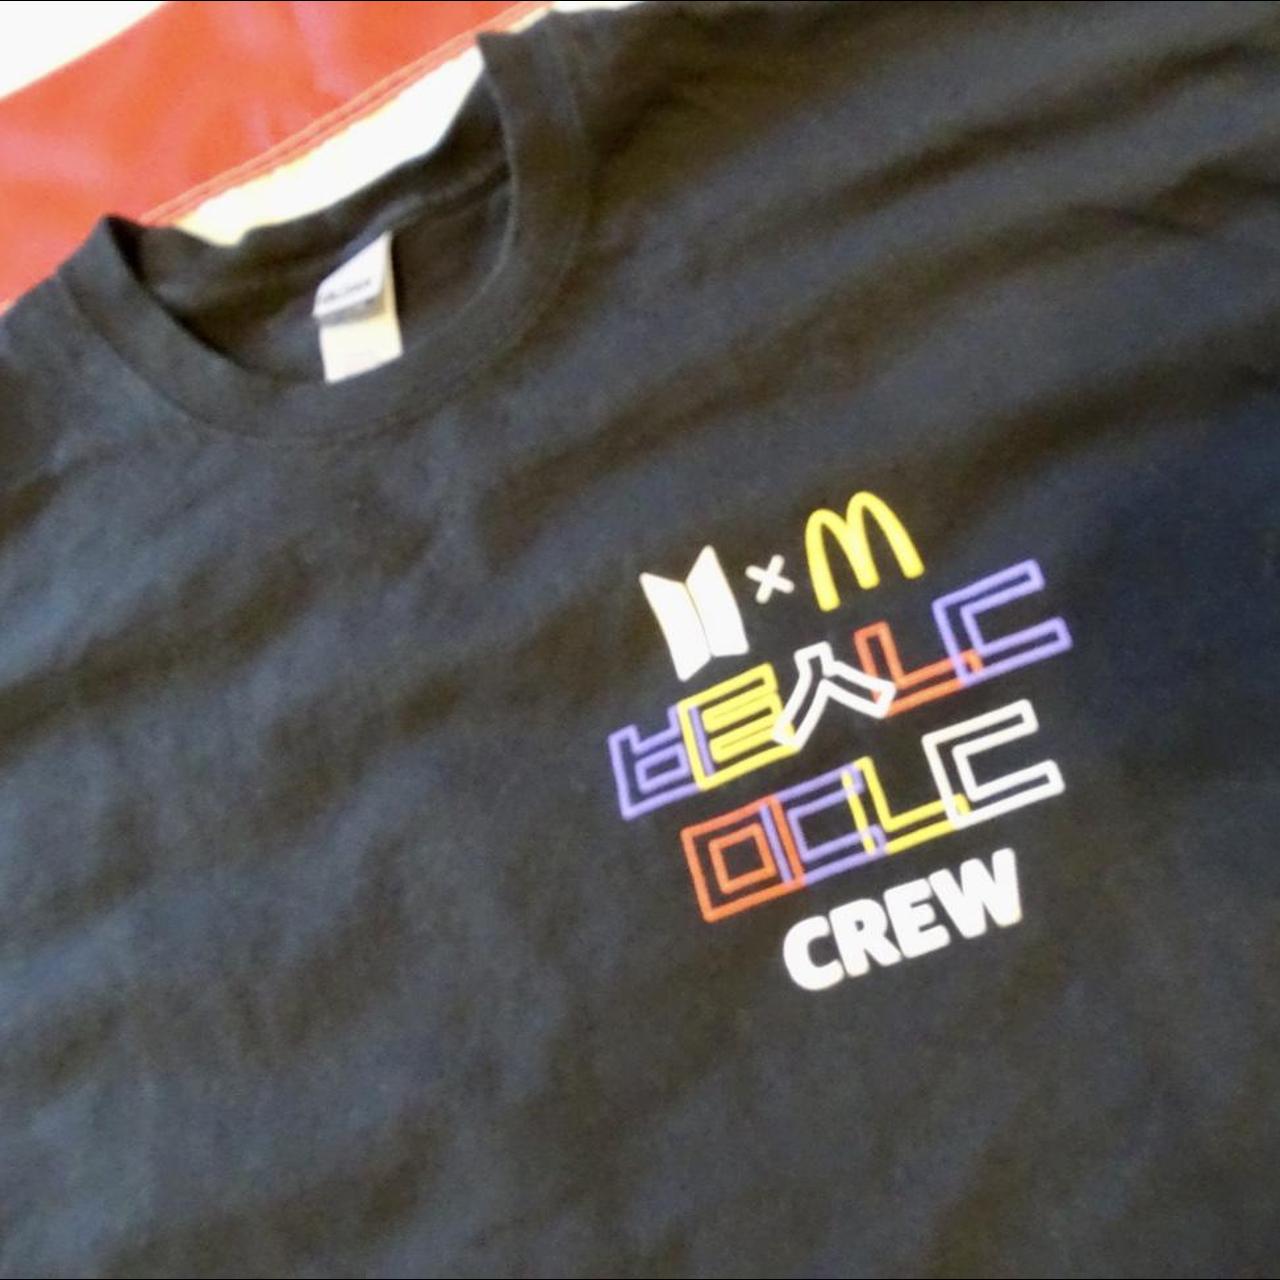 Product Image 4 - BTS X McDonalds collaboration shirt.